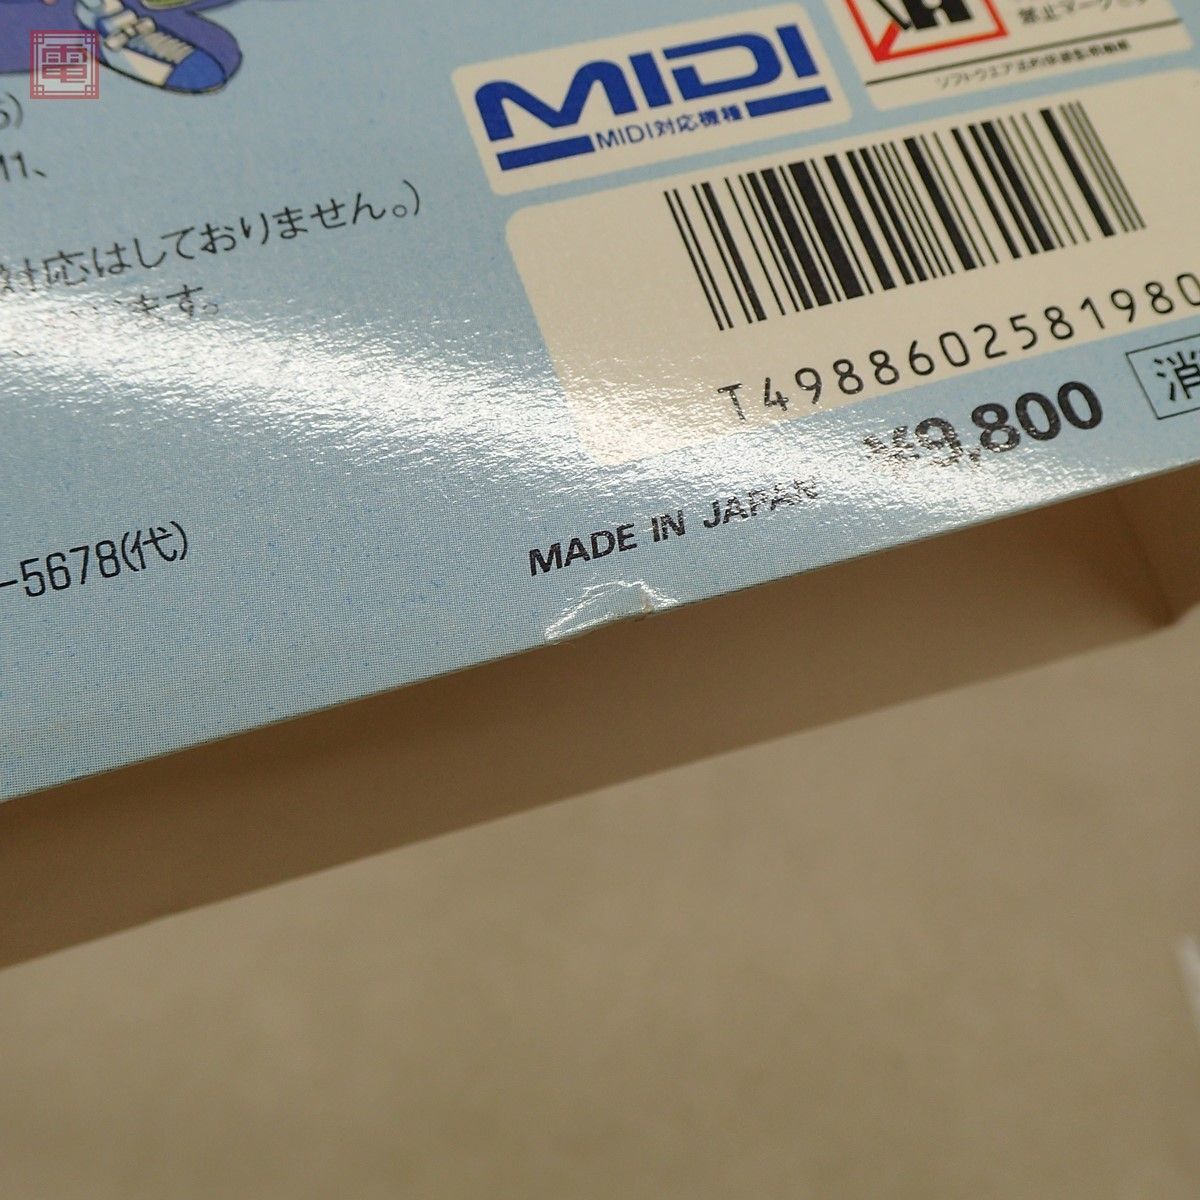 1 jpy ~ operation goods X68000 5 -inch FD came out .!!TwinBee twin Be Konami KONAMI box opinion * postcard attaching [20